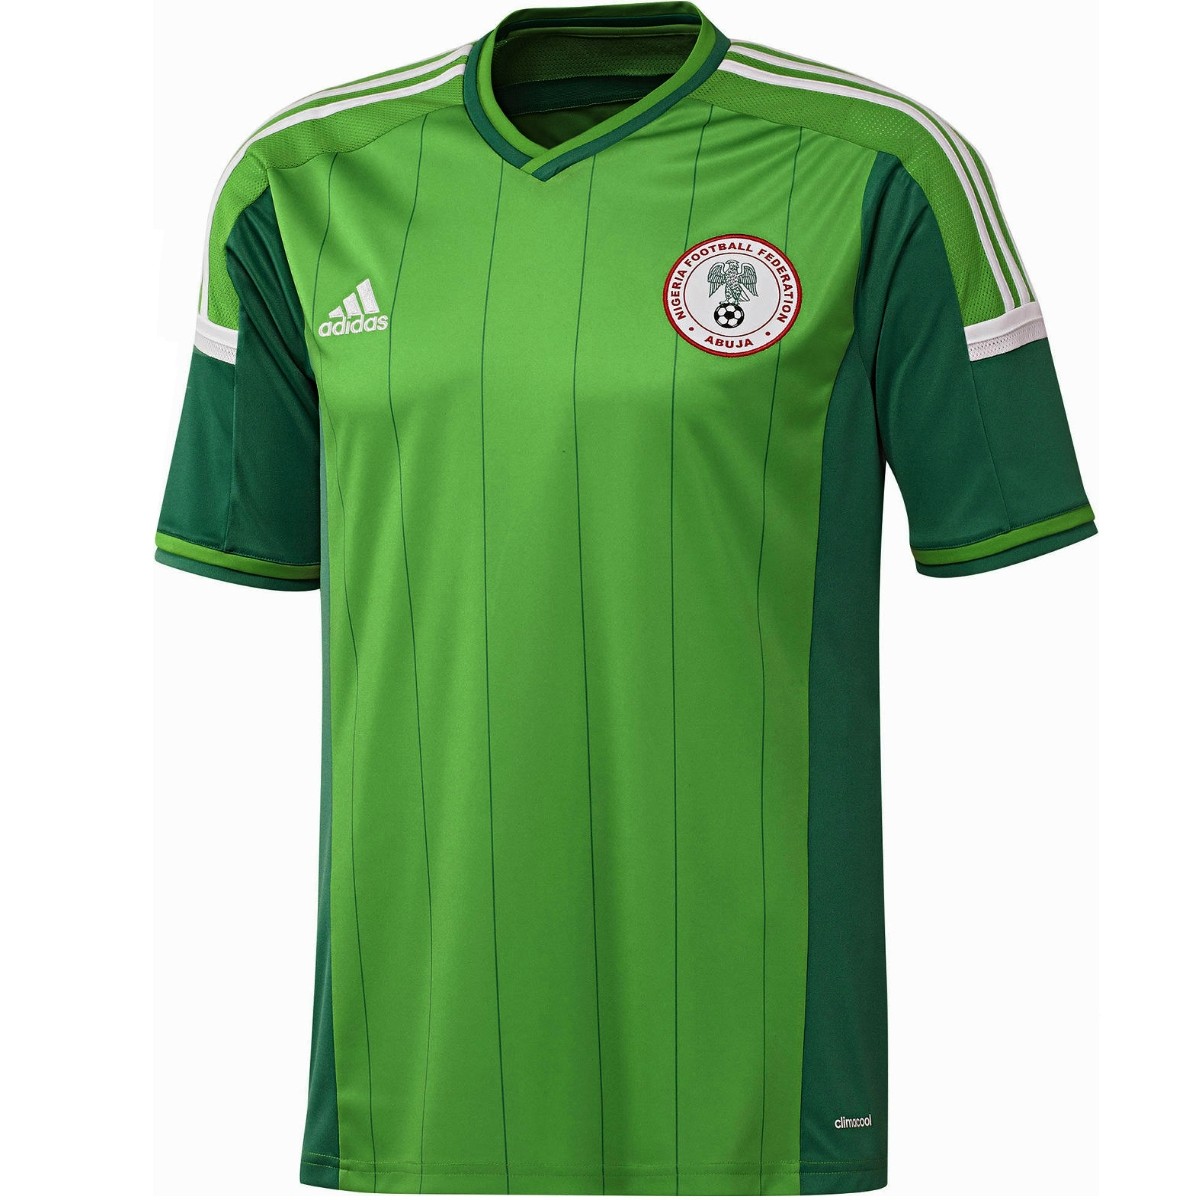 nigeria adidas jersey